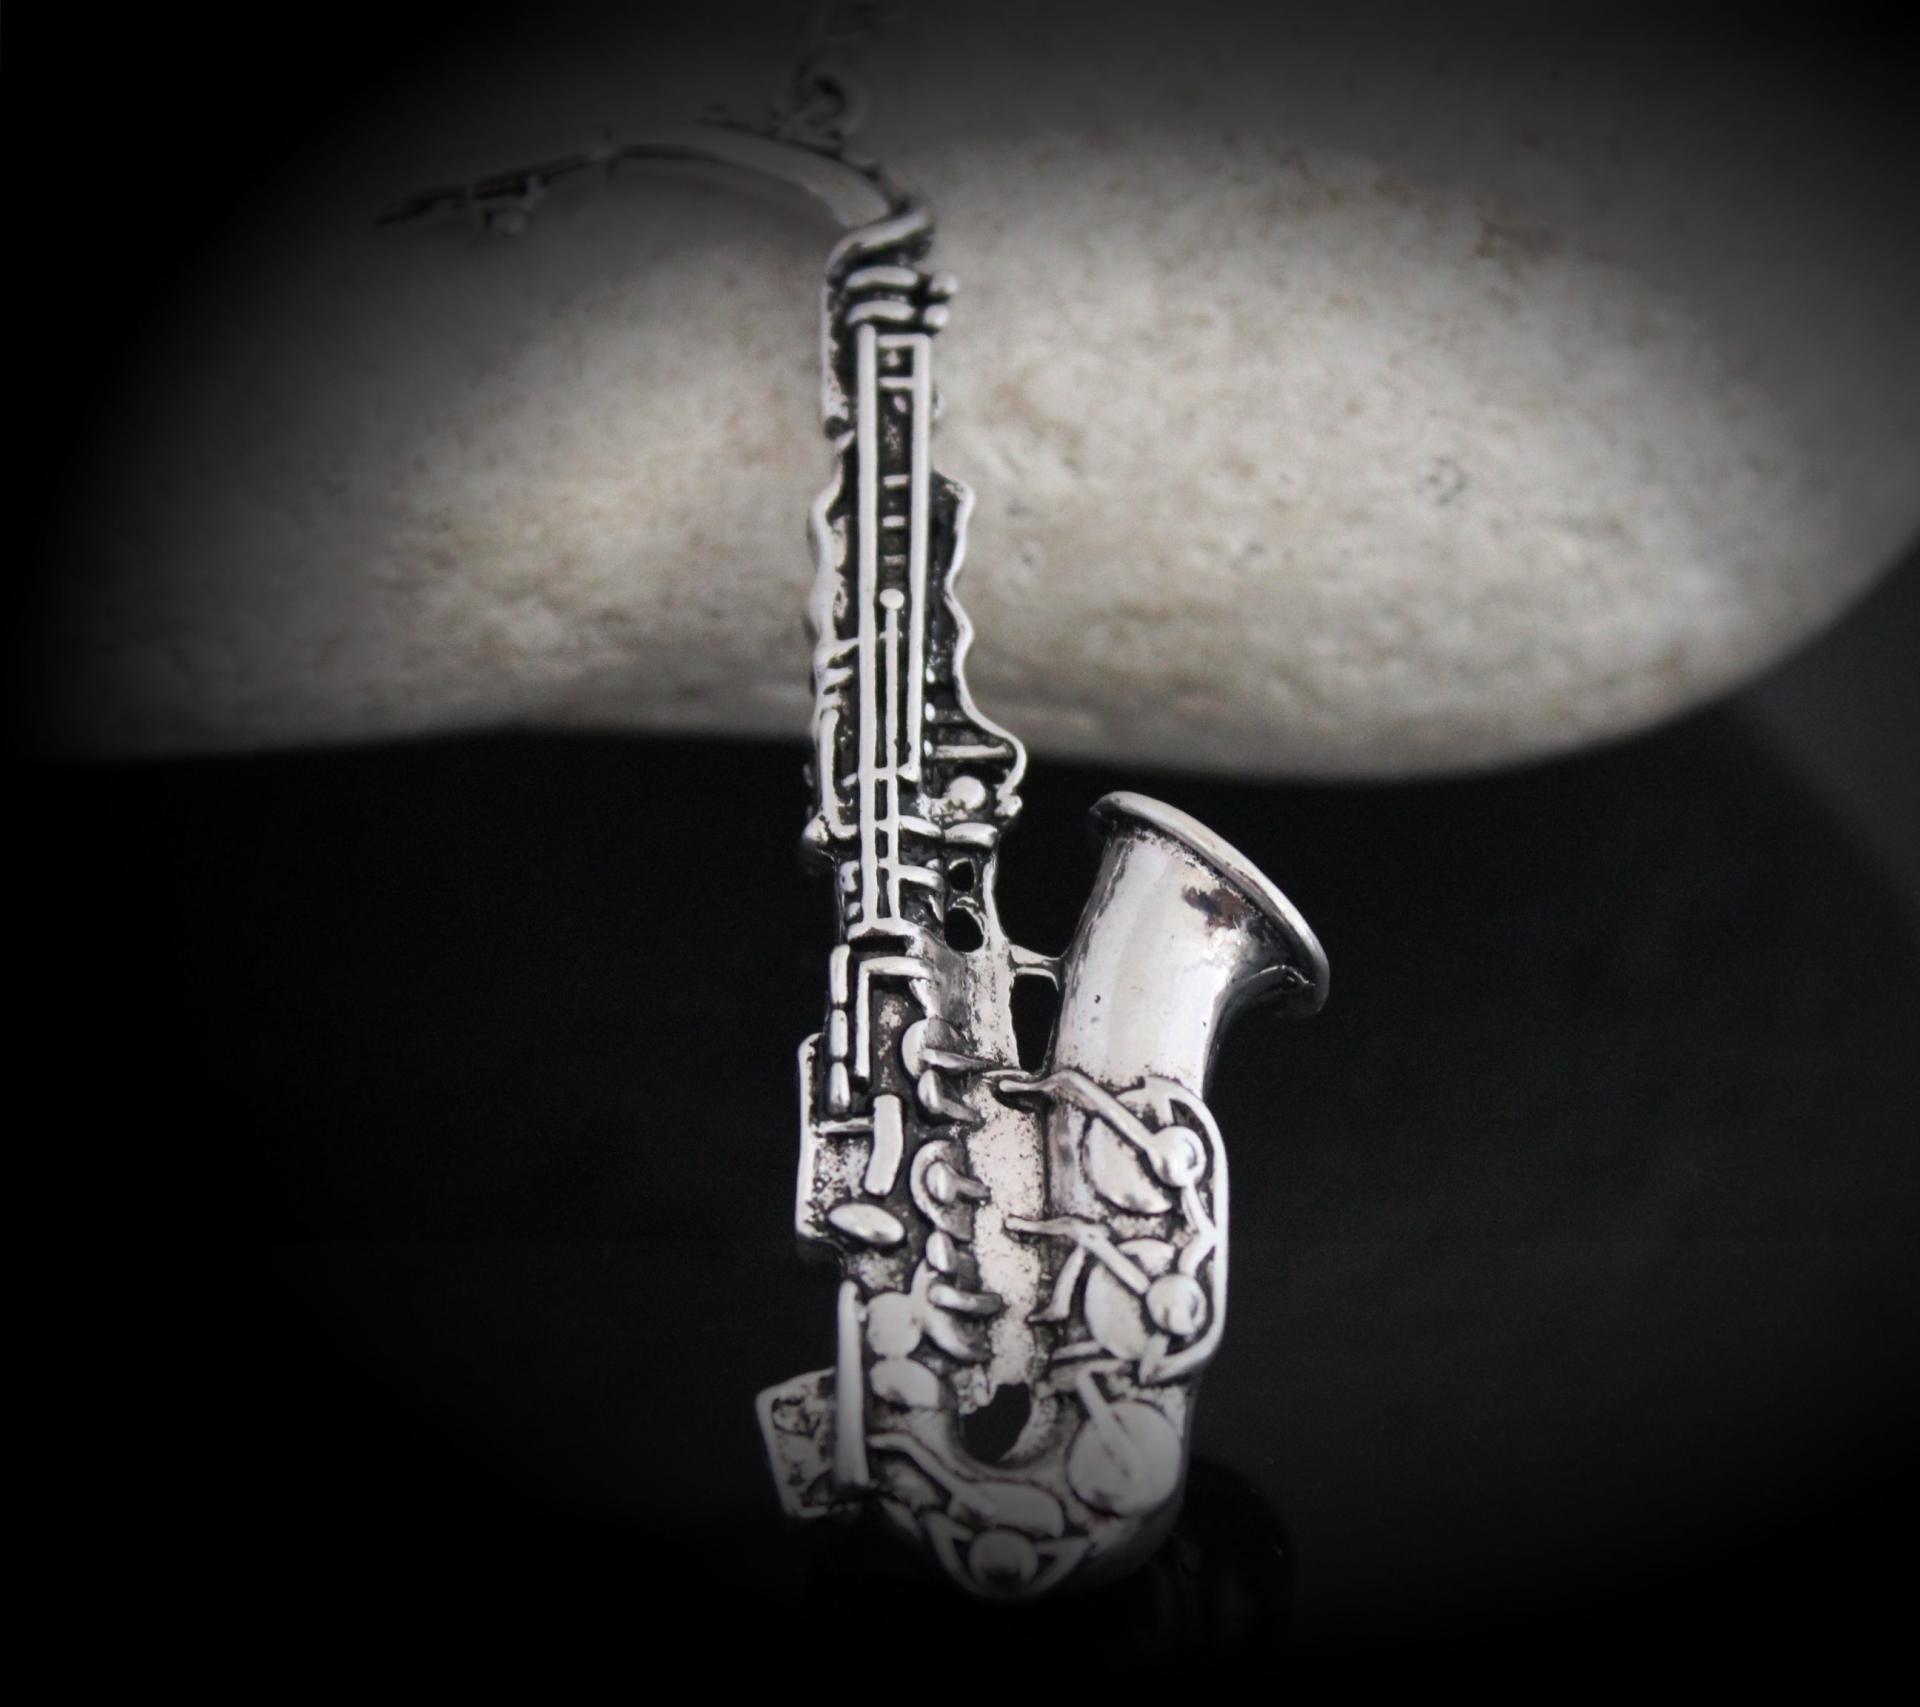 Silver Saxophone Necklace Vintage Style